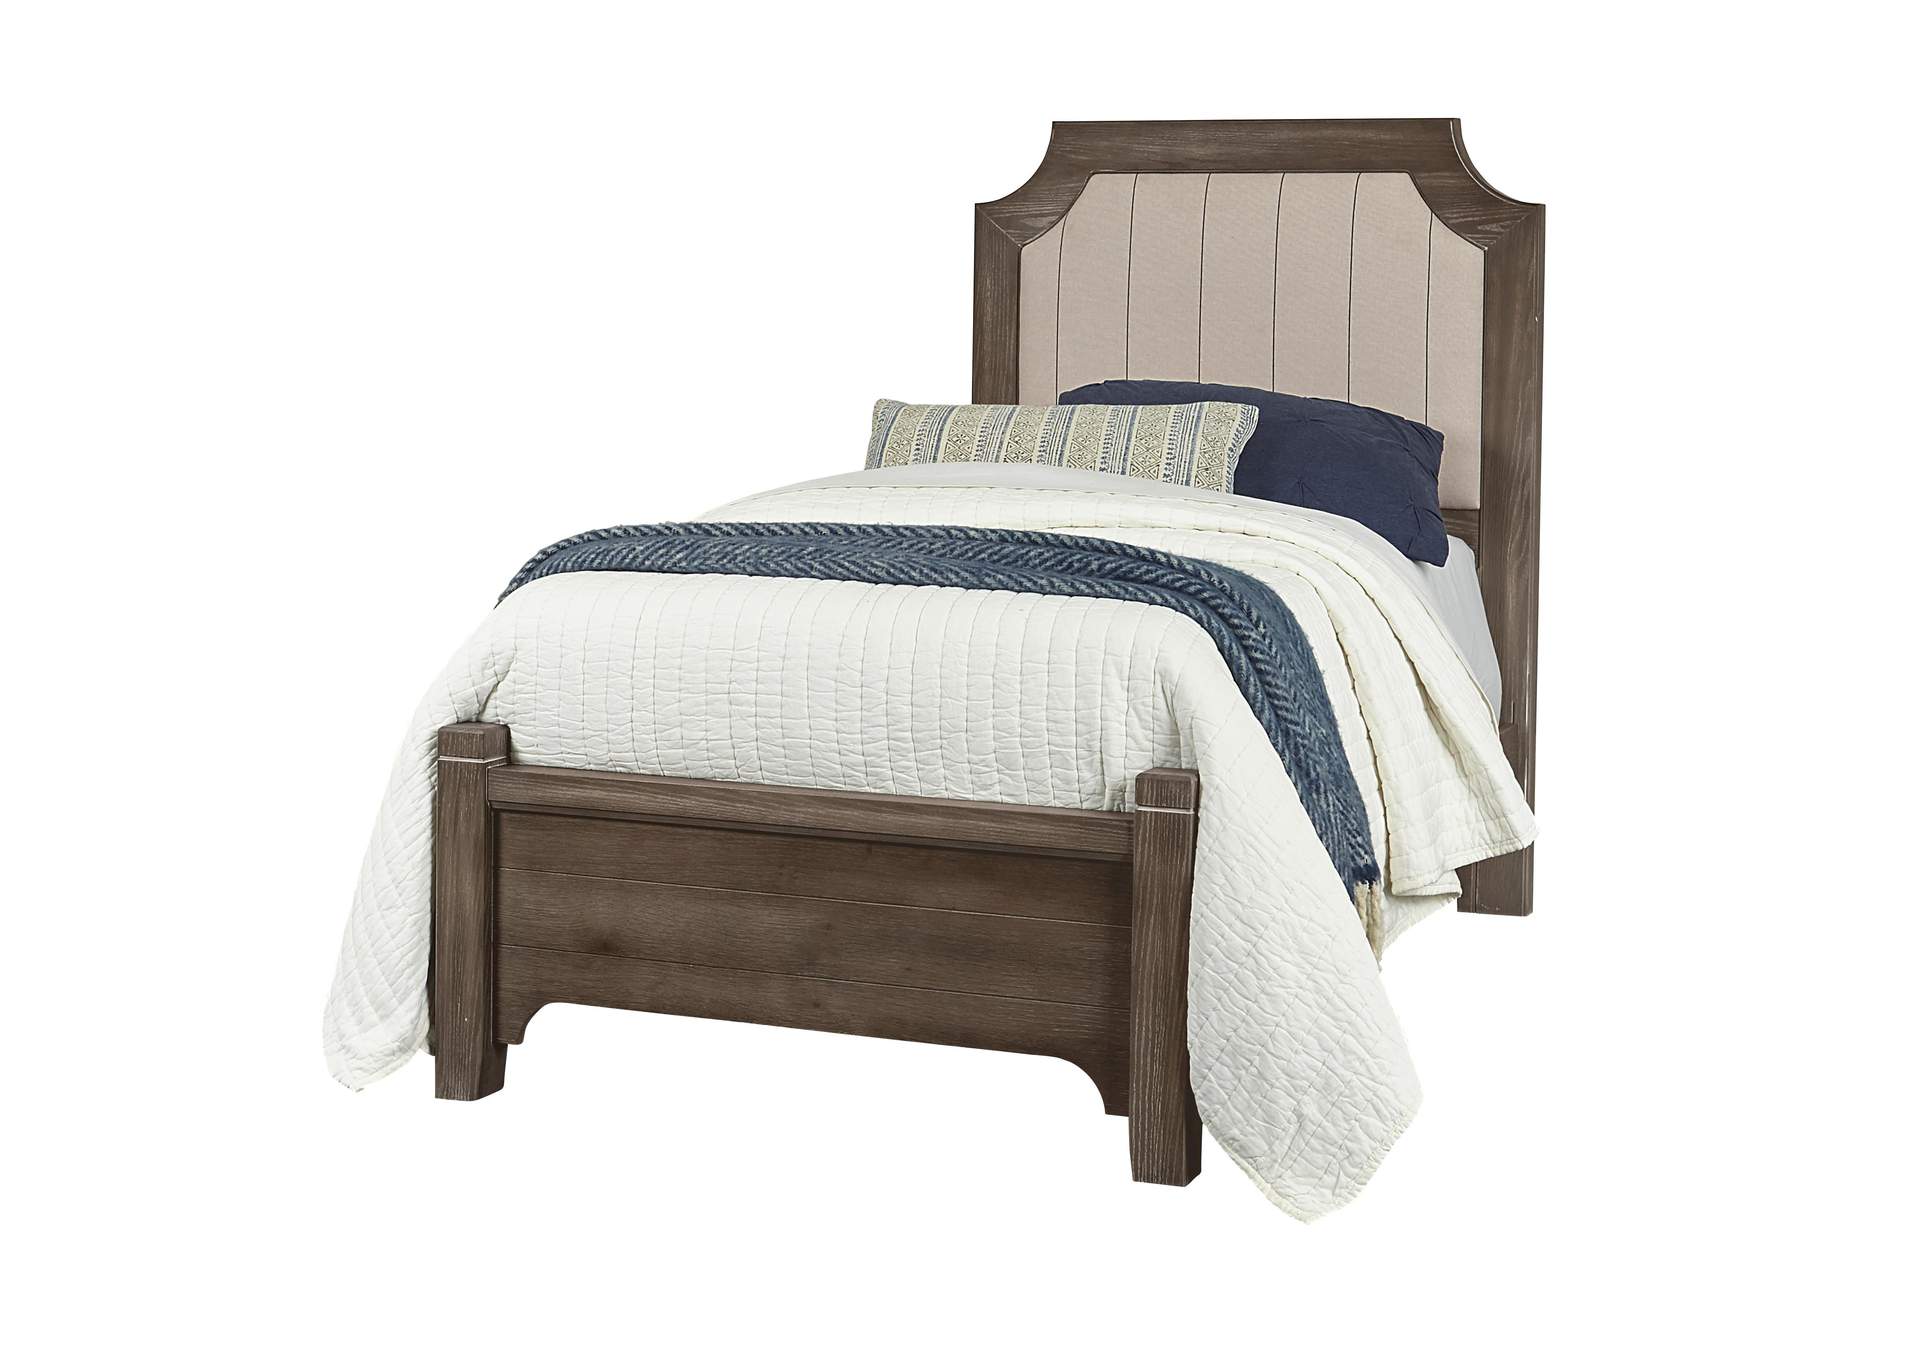 Bungalow Cararra Upholstered Twin Bed,Vaughan-Bassett